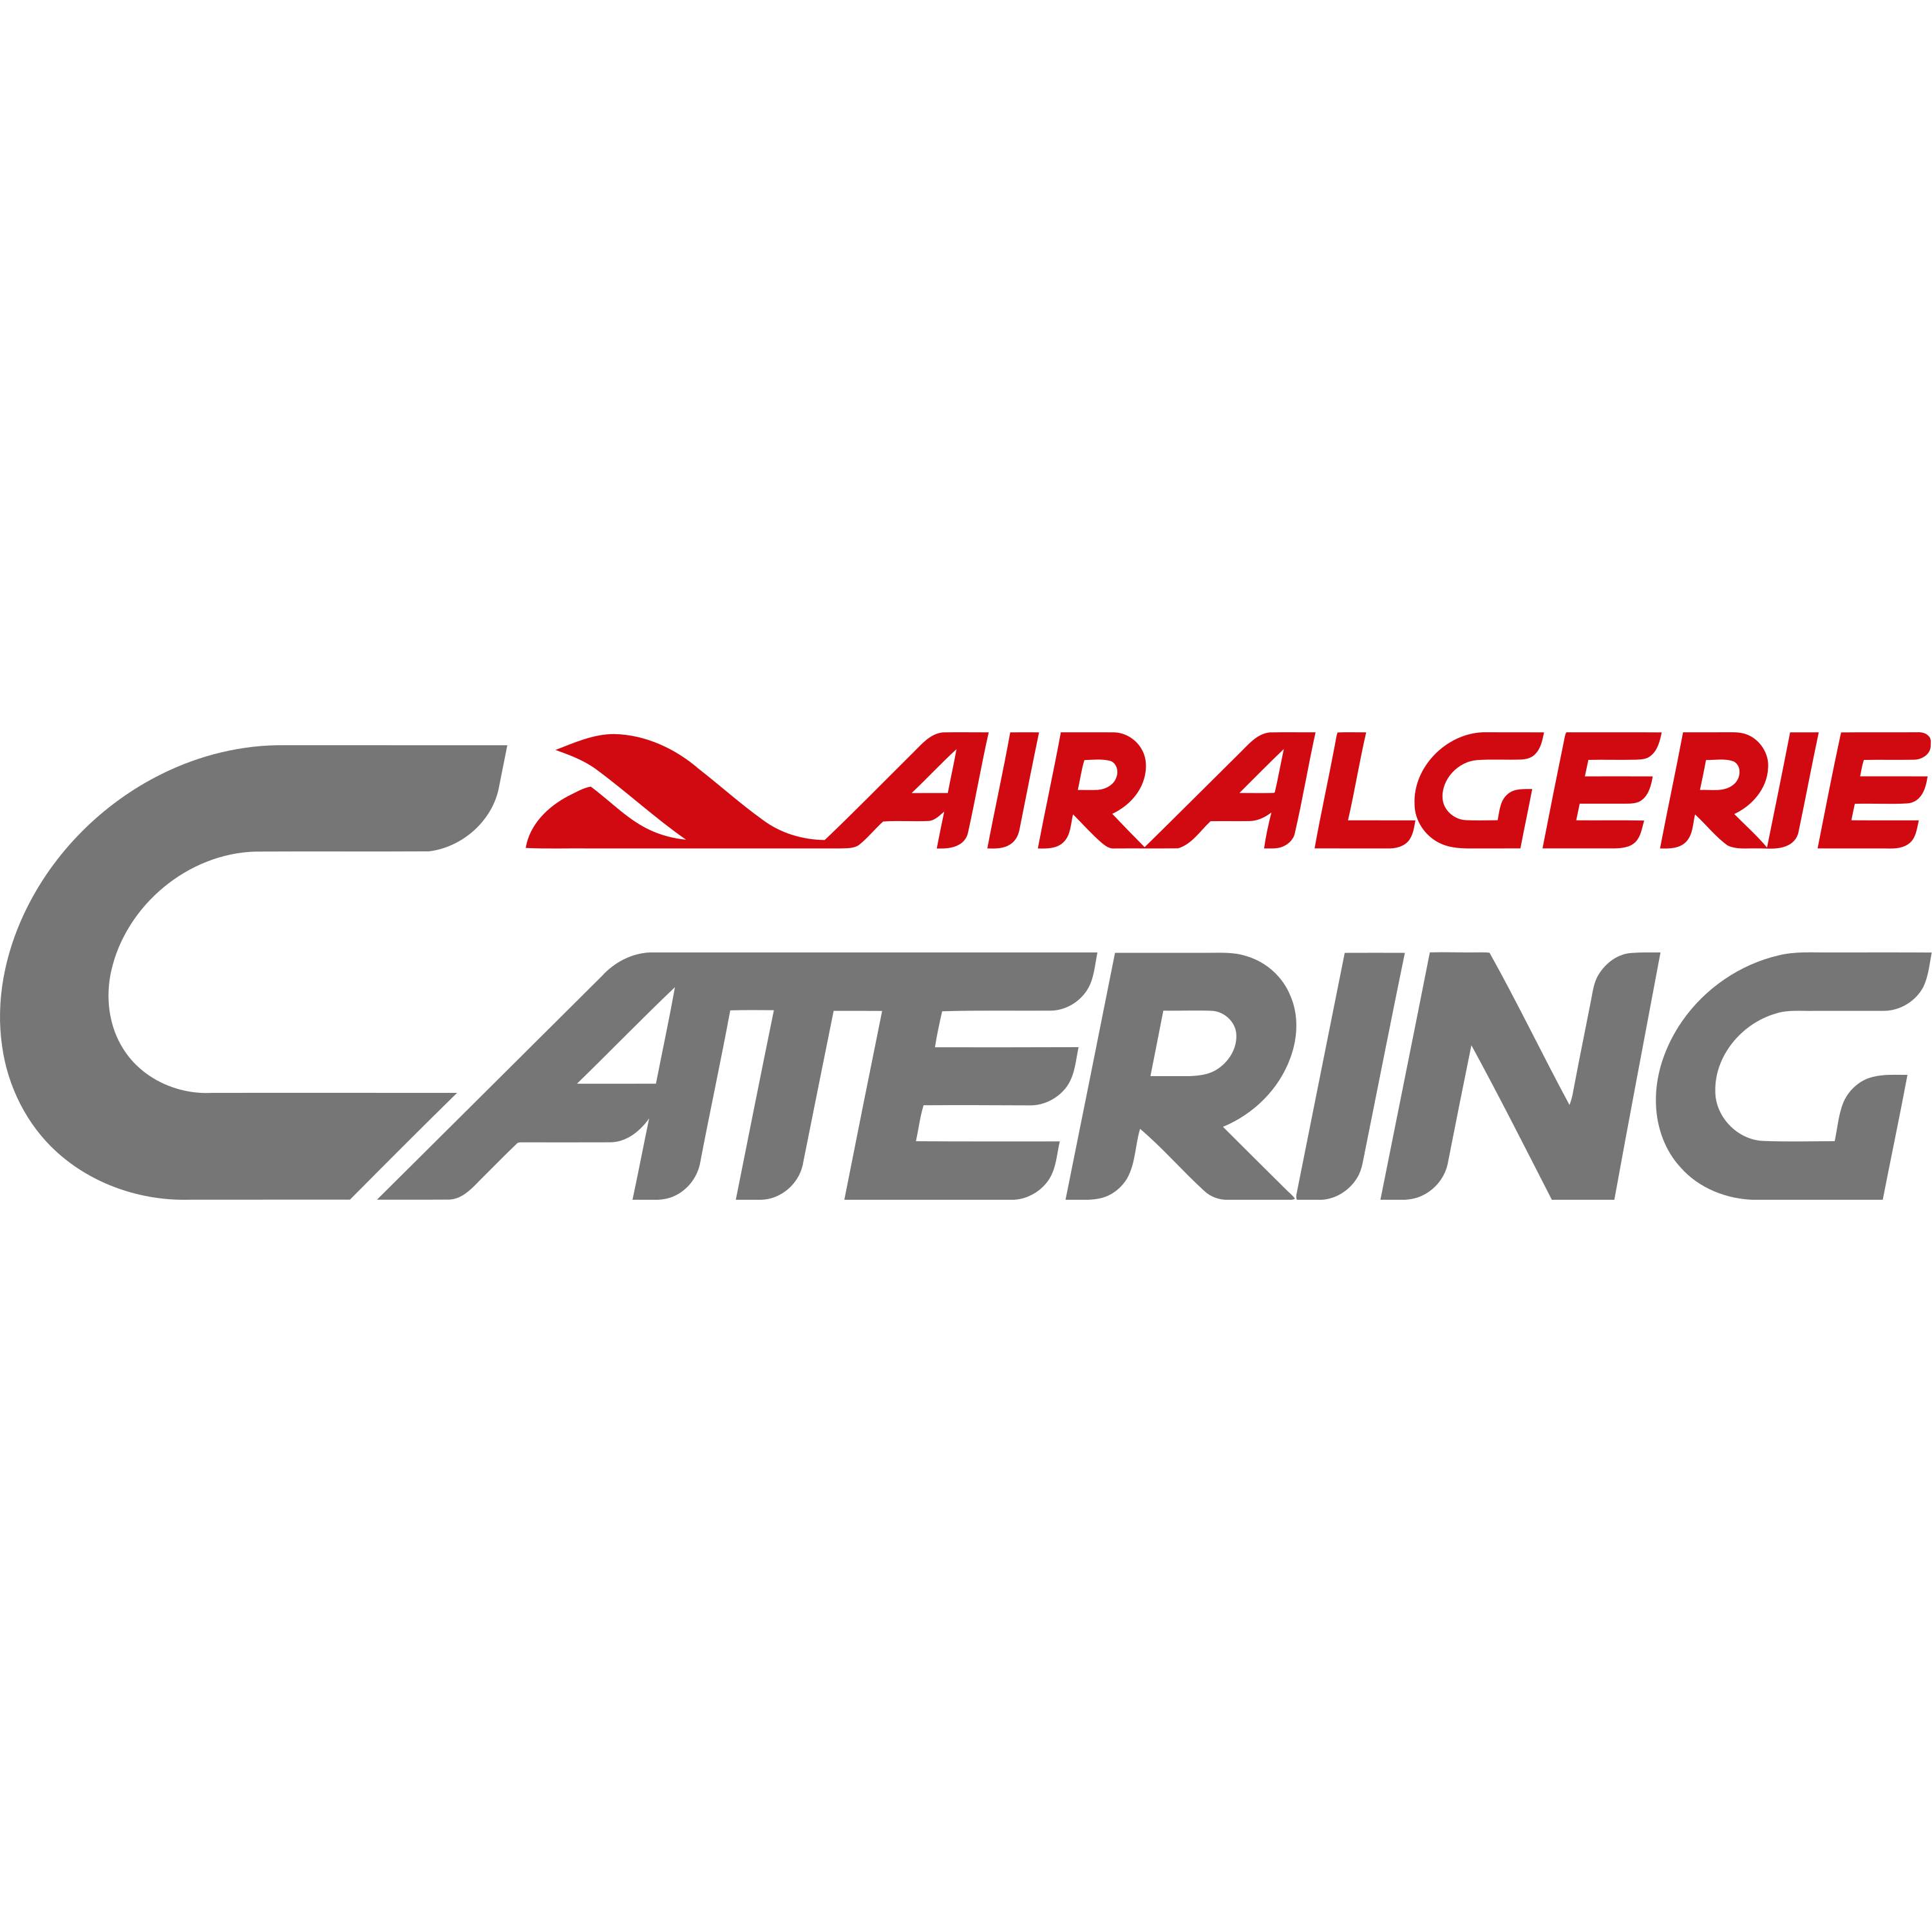 Air Algerie Catering Logo  Transparent Image